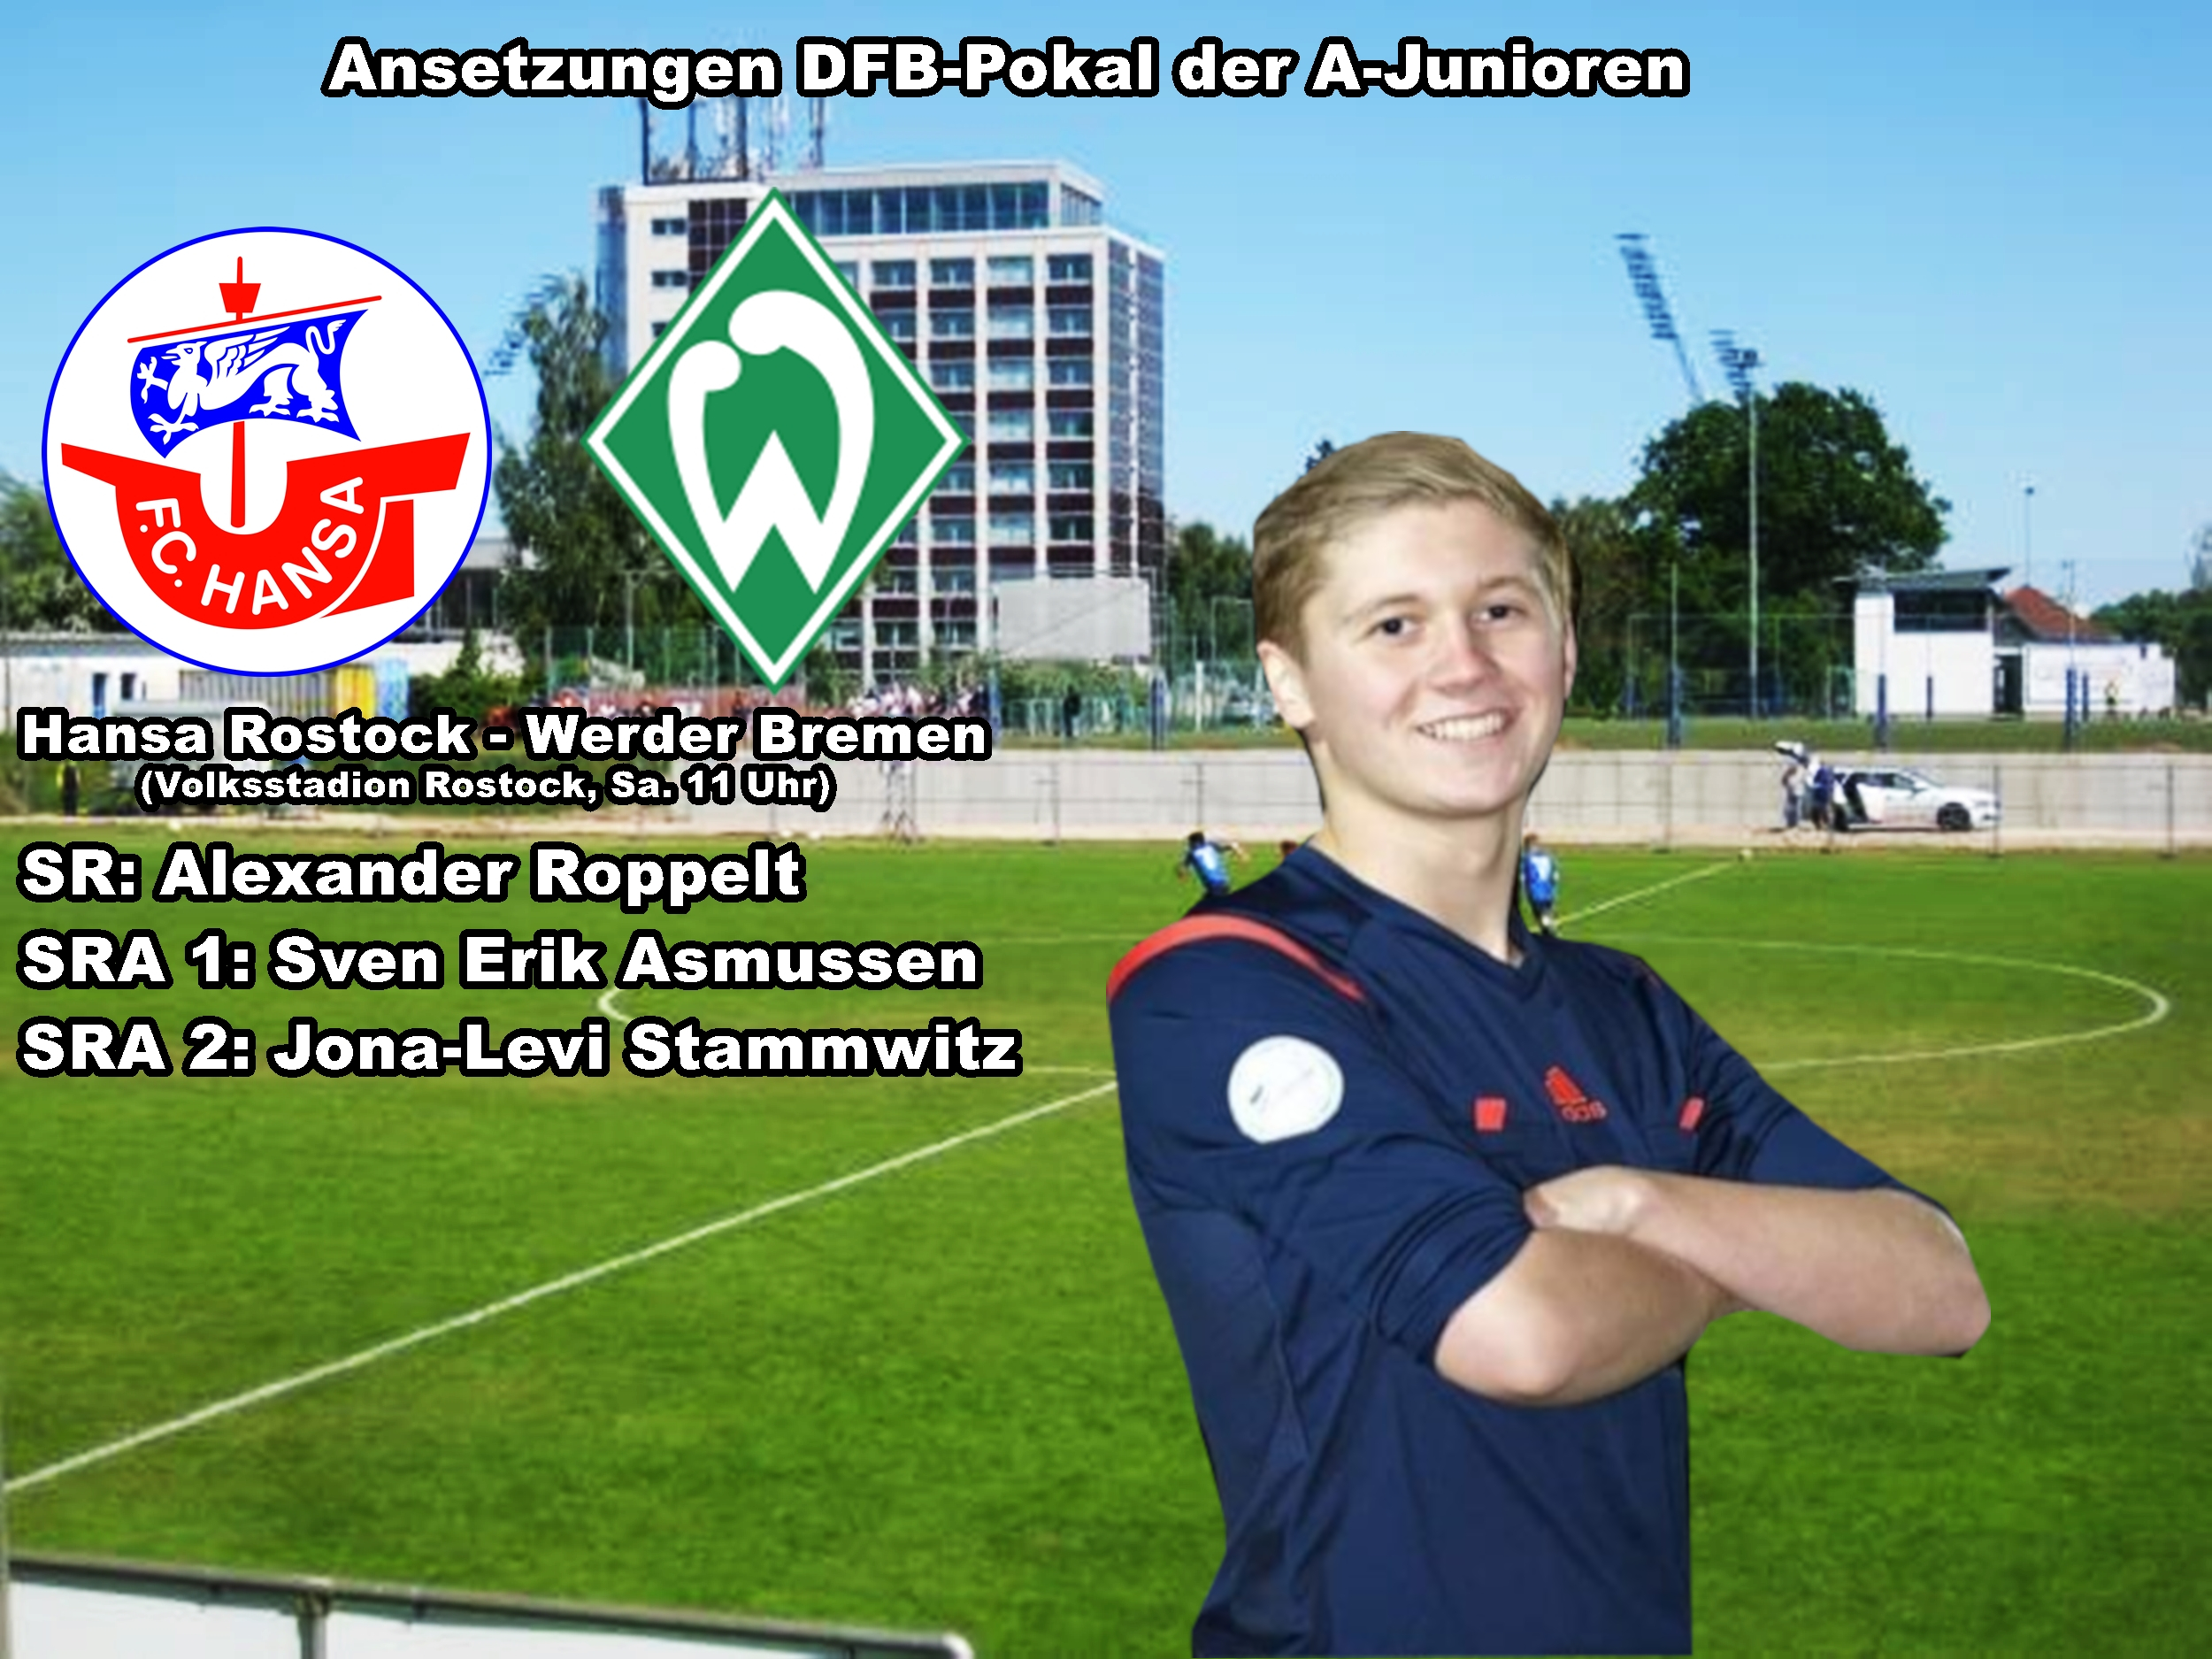 You are currently viewing Ansetzungen Juniorenpokal